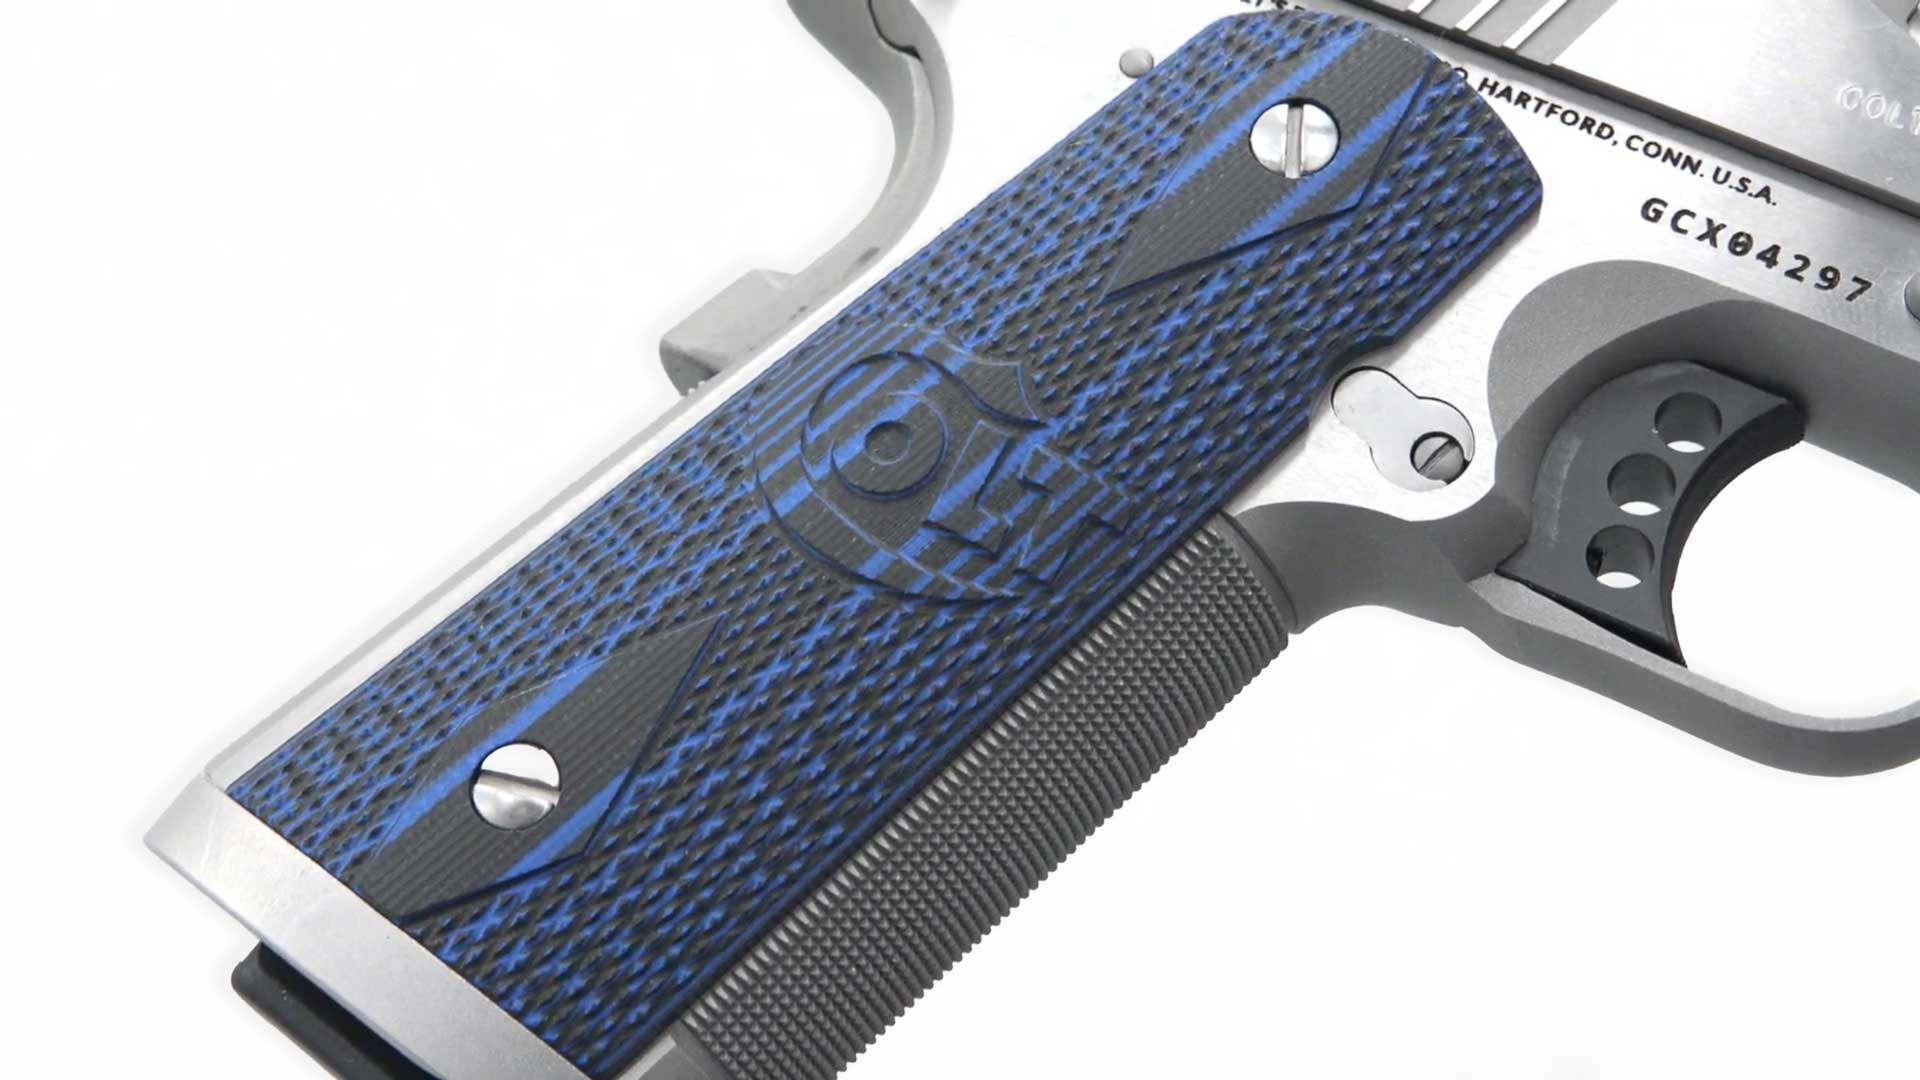 handgun frame stainless steel metal pistol blue g10 composite stocks grip gun trigger